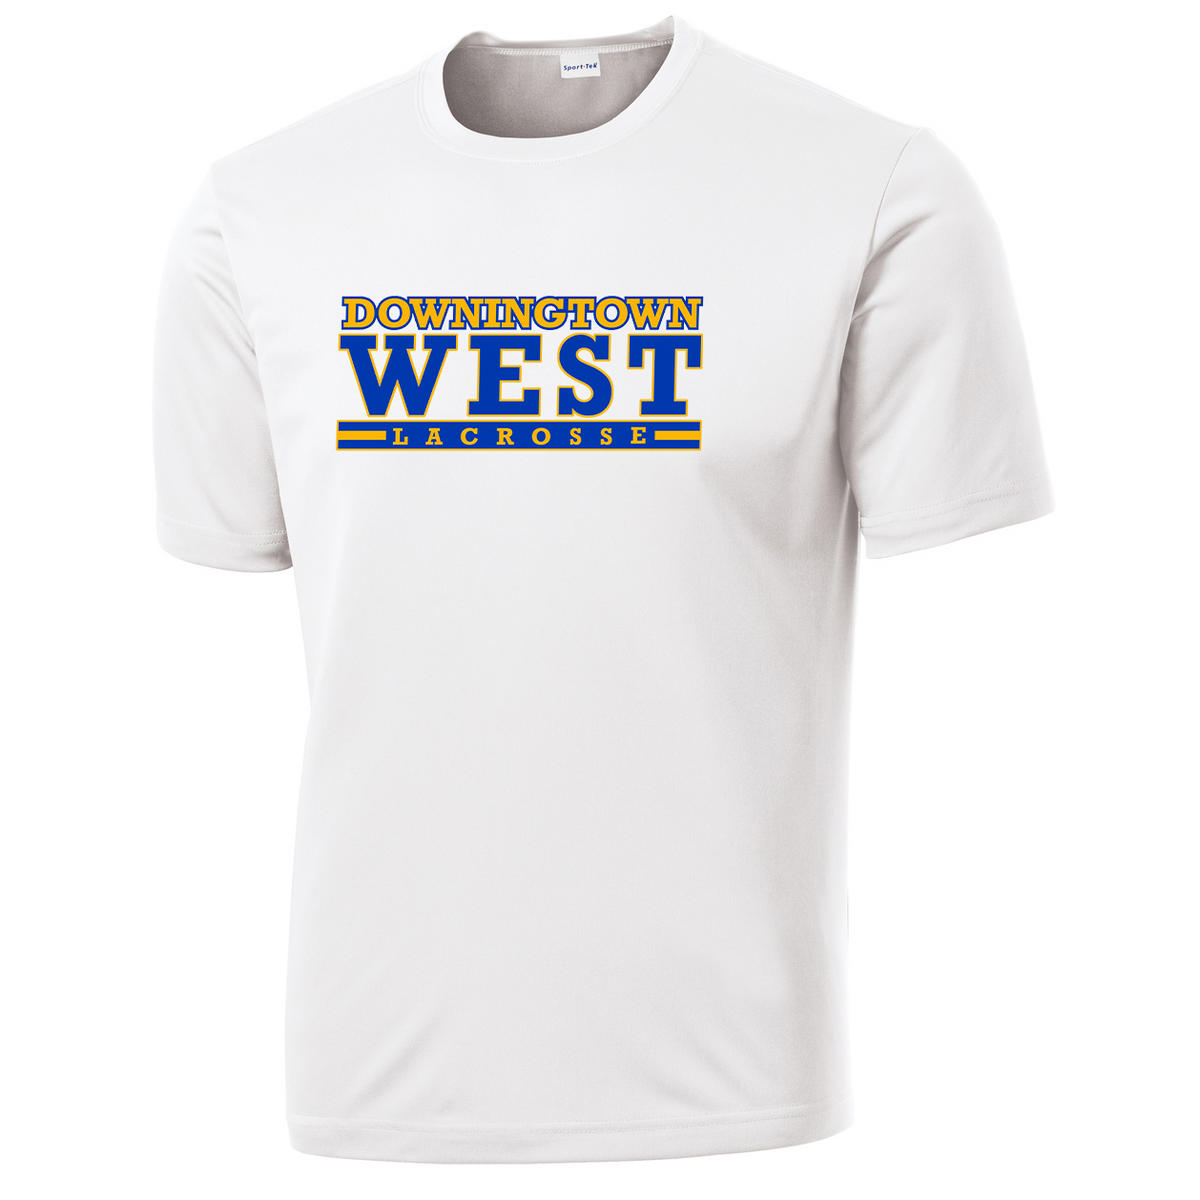 Downingtown West Lacrosse Performance T-Shirt